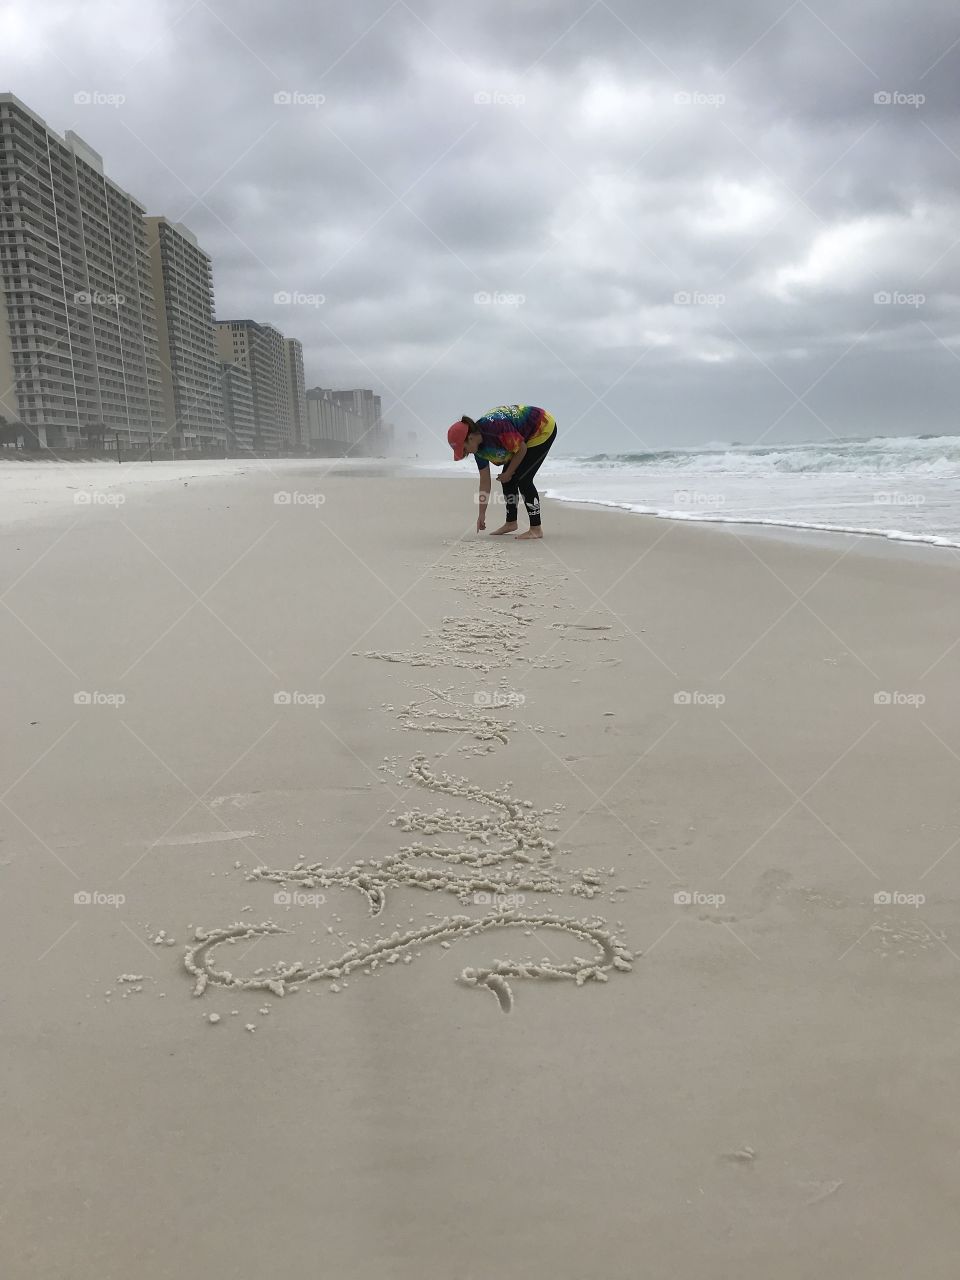 Sand art 